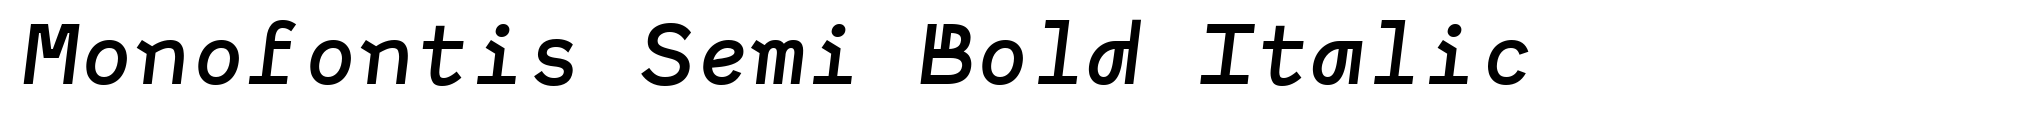 Monofontis Semi Bold Italic image